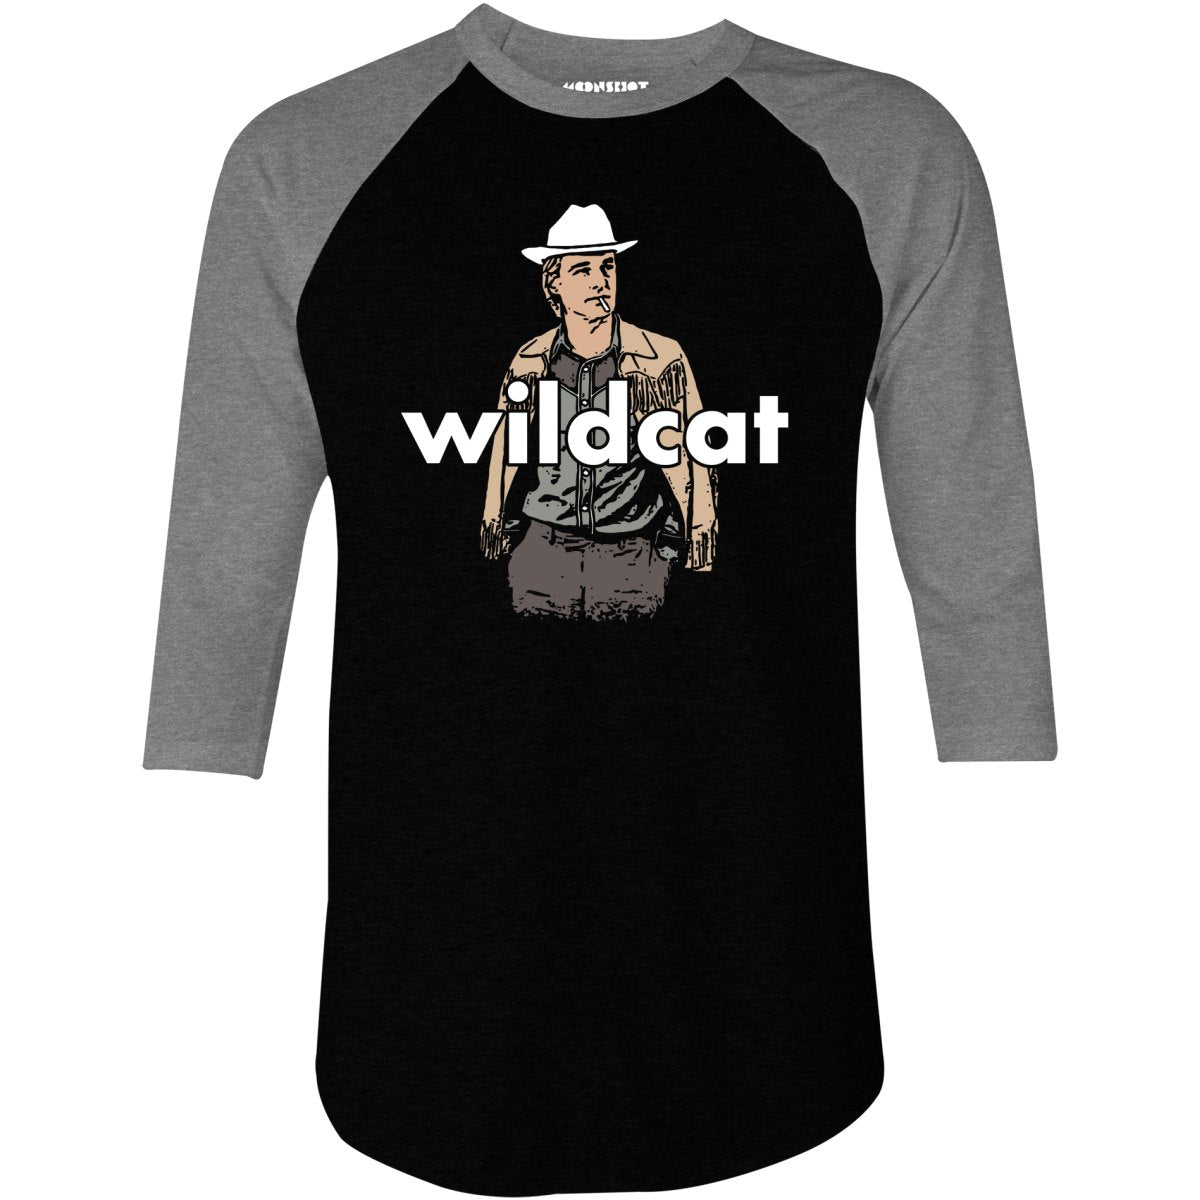 Wildcat - 3/4 Sleeve Raglan T-Shirt